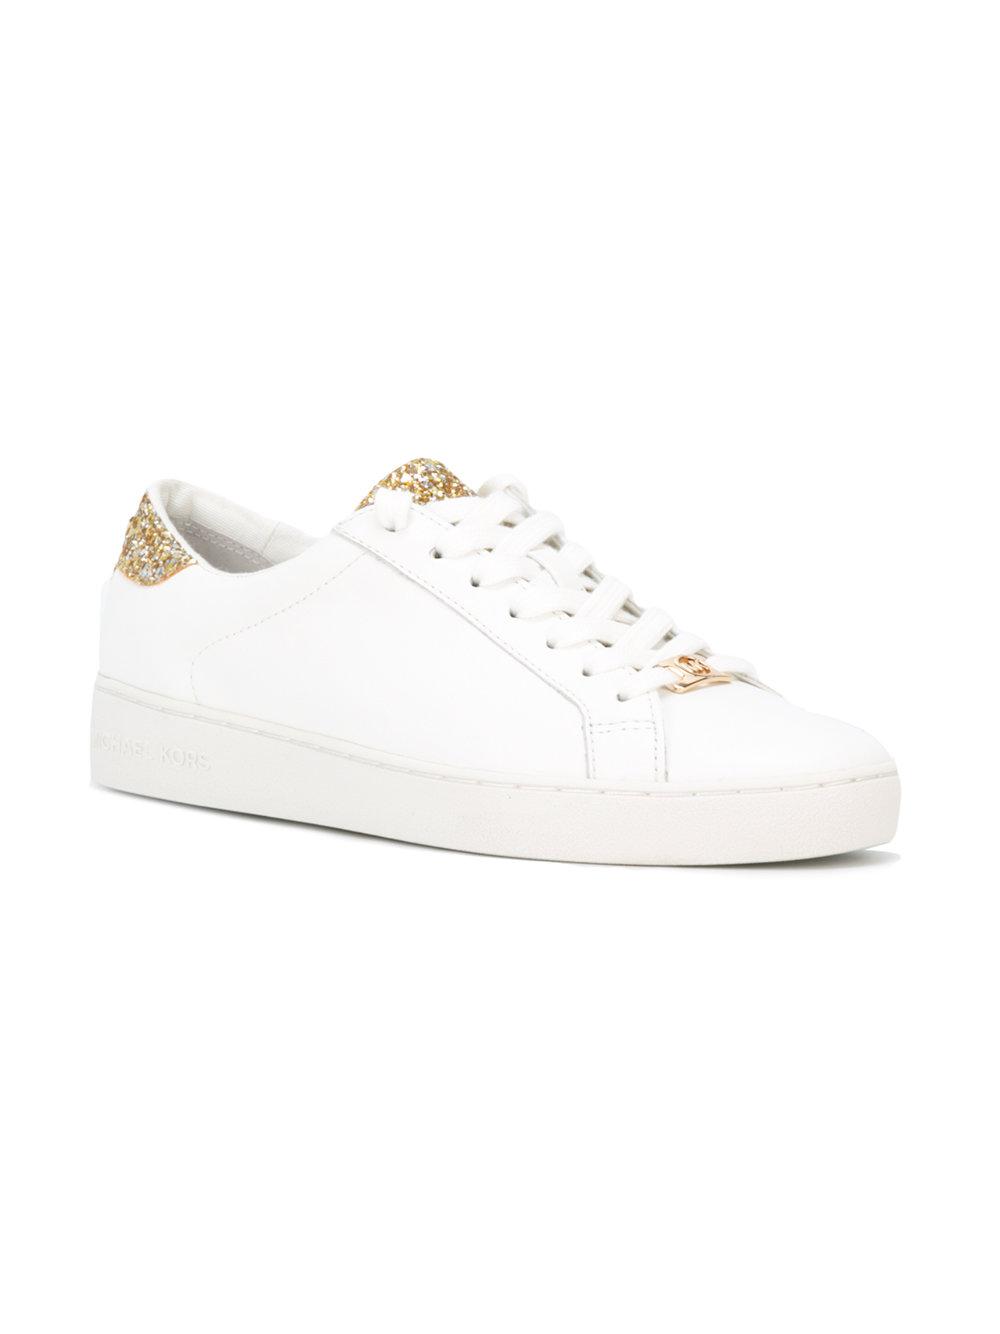 Michael Kors Glitter Detail Sneakers in White | Lyst